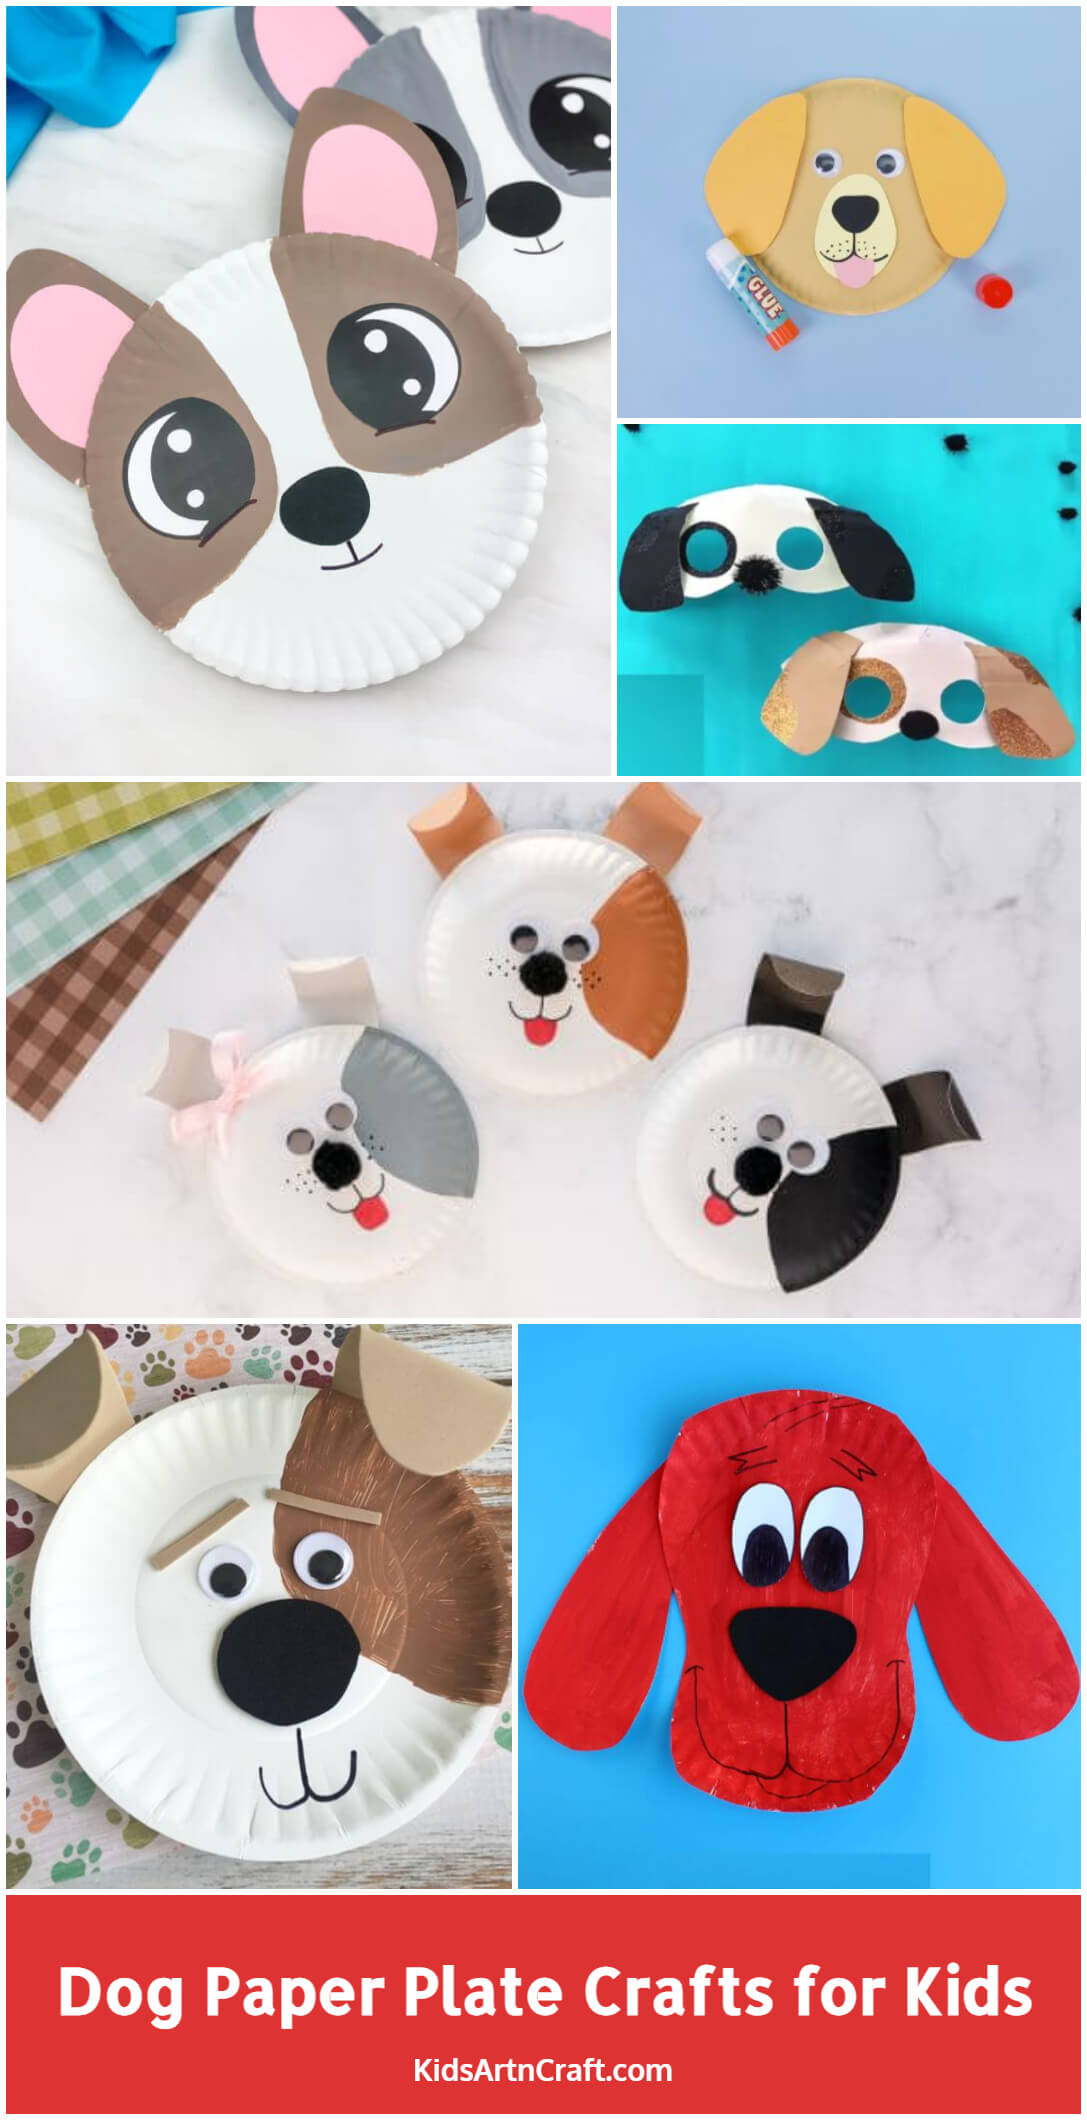  Dog Paper Plate Crafts for Kids